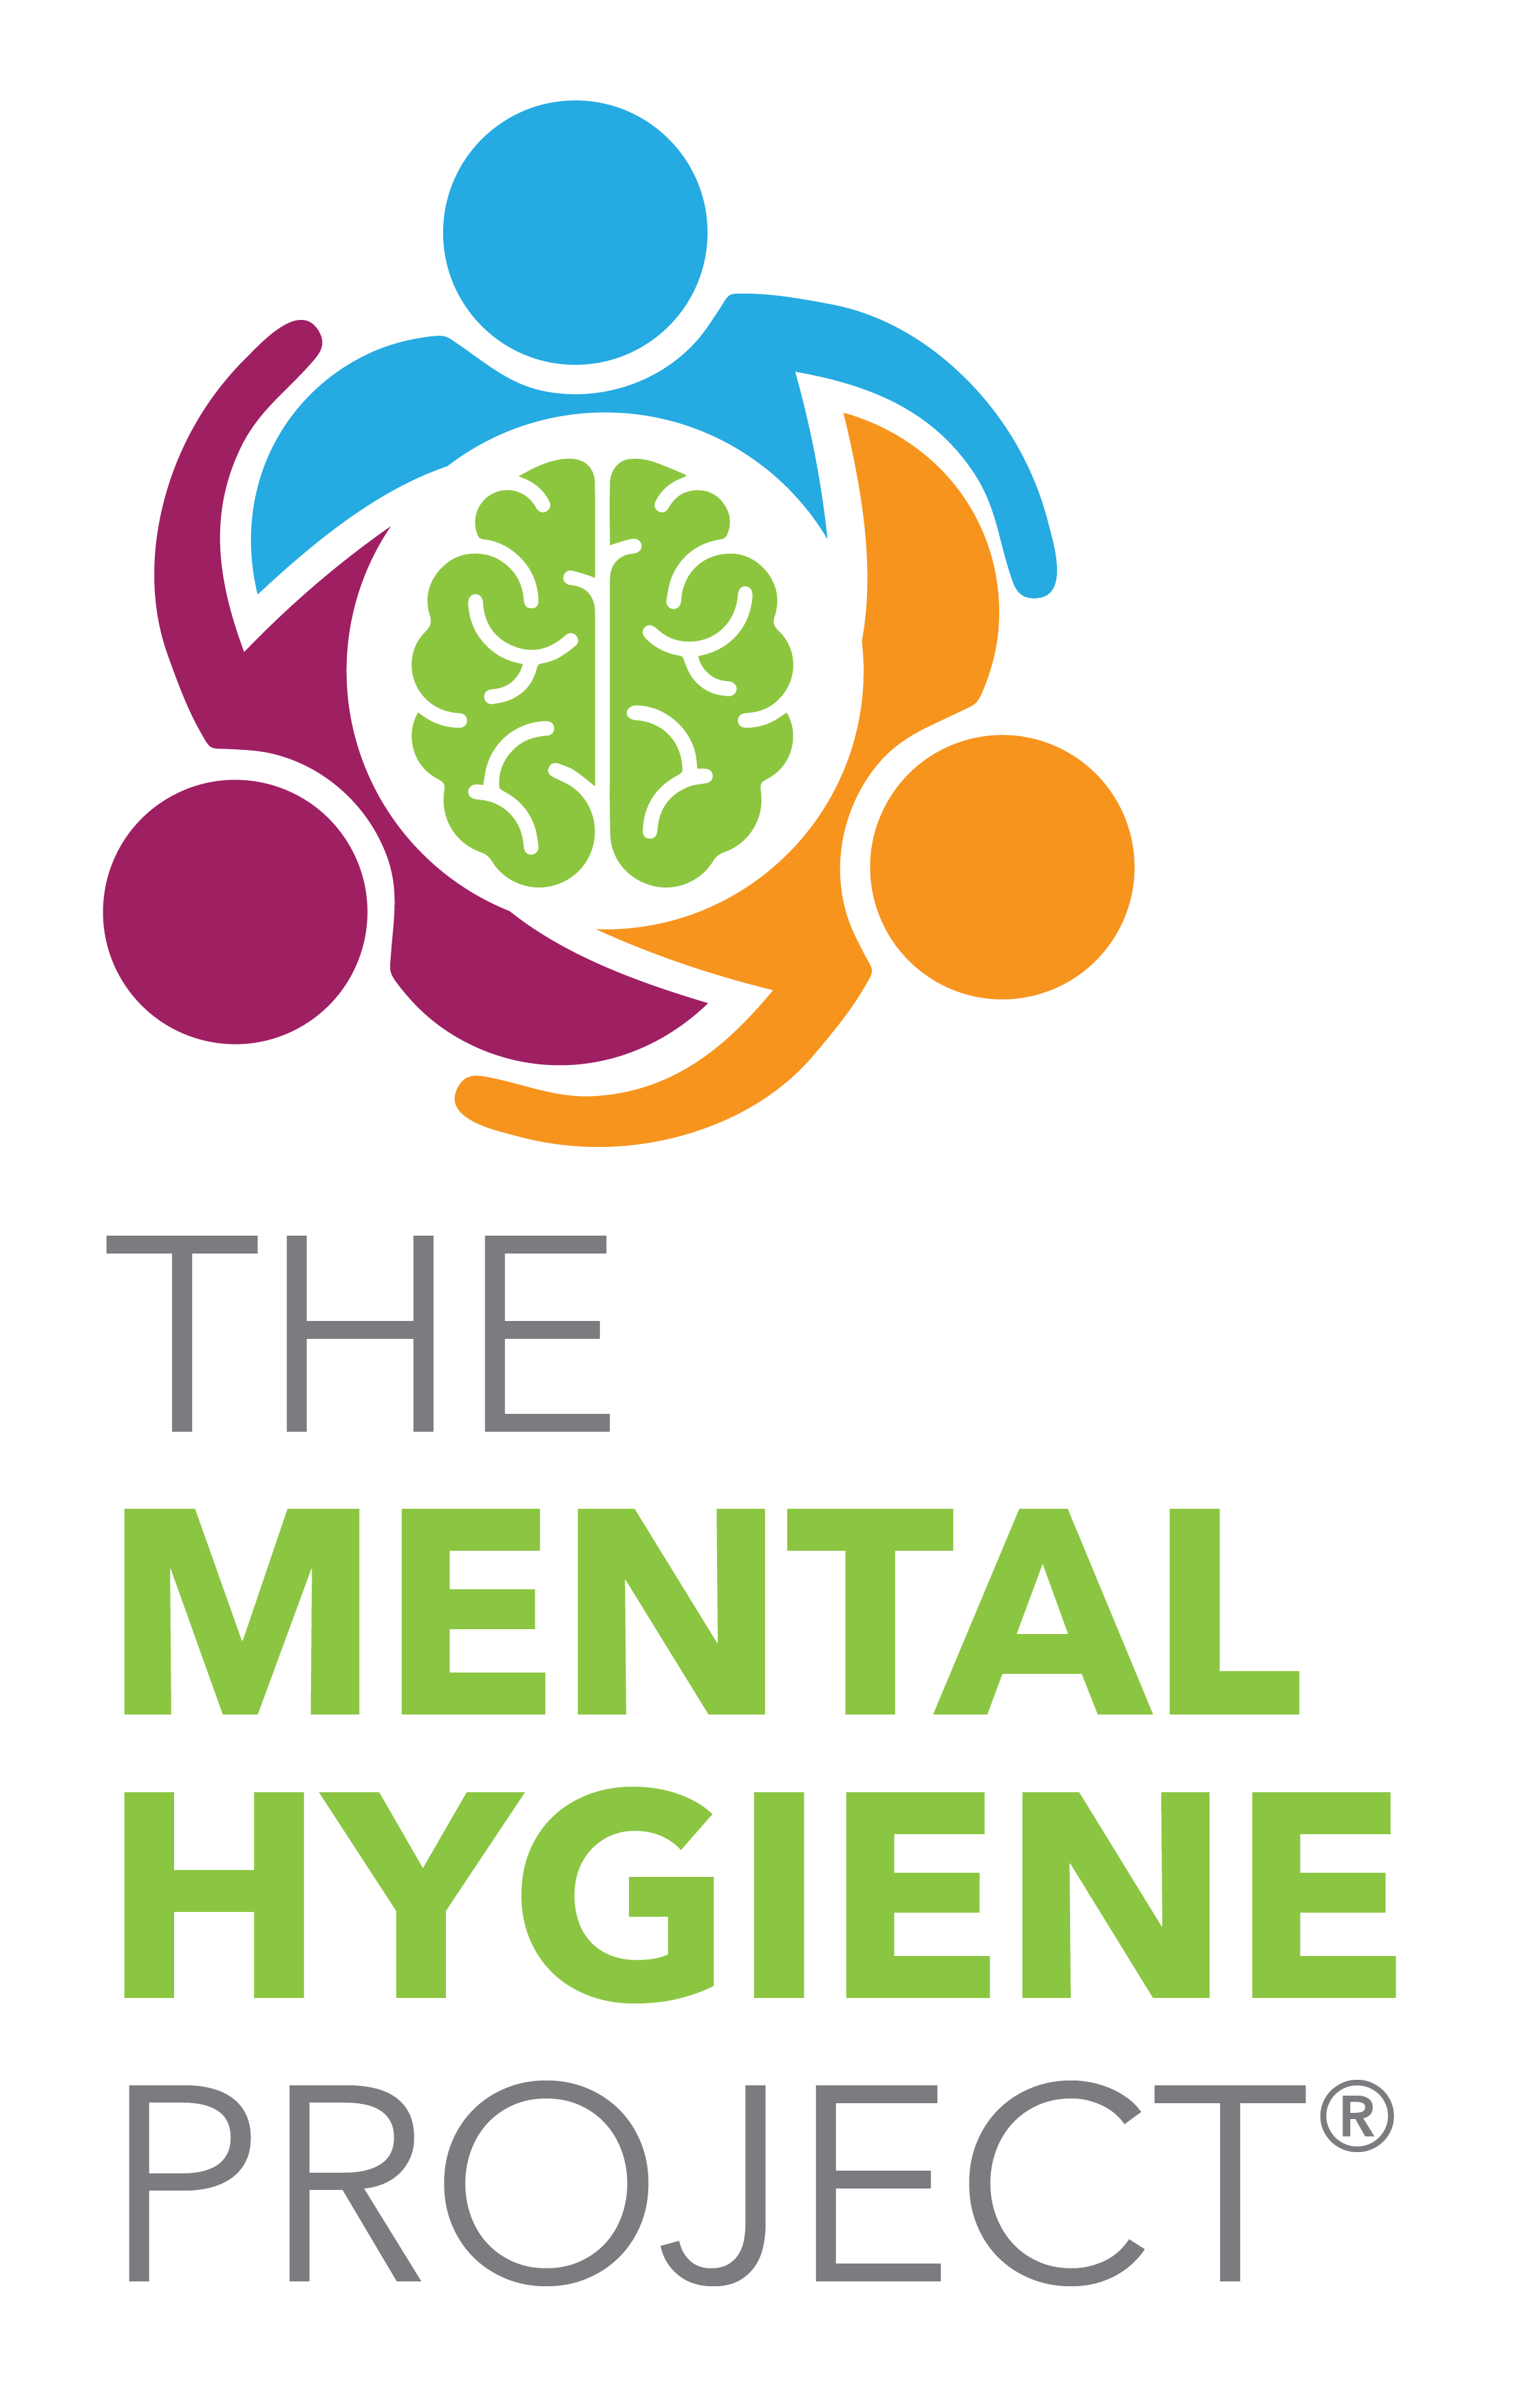 The Mental Hygiene Project logo